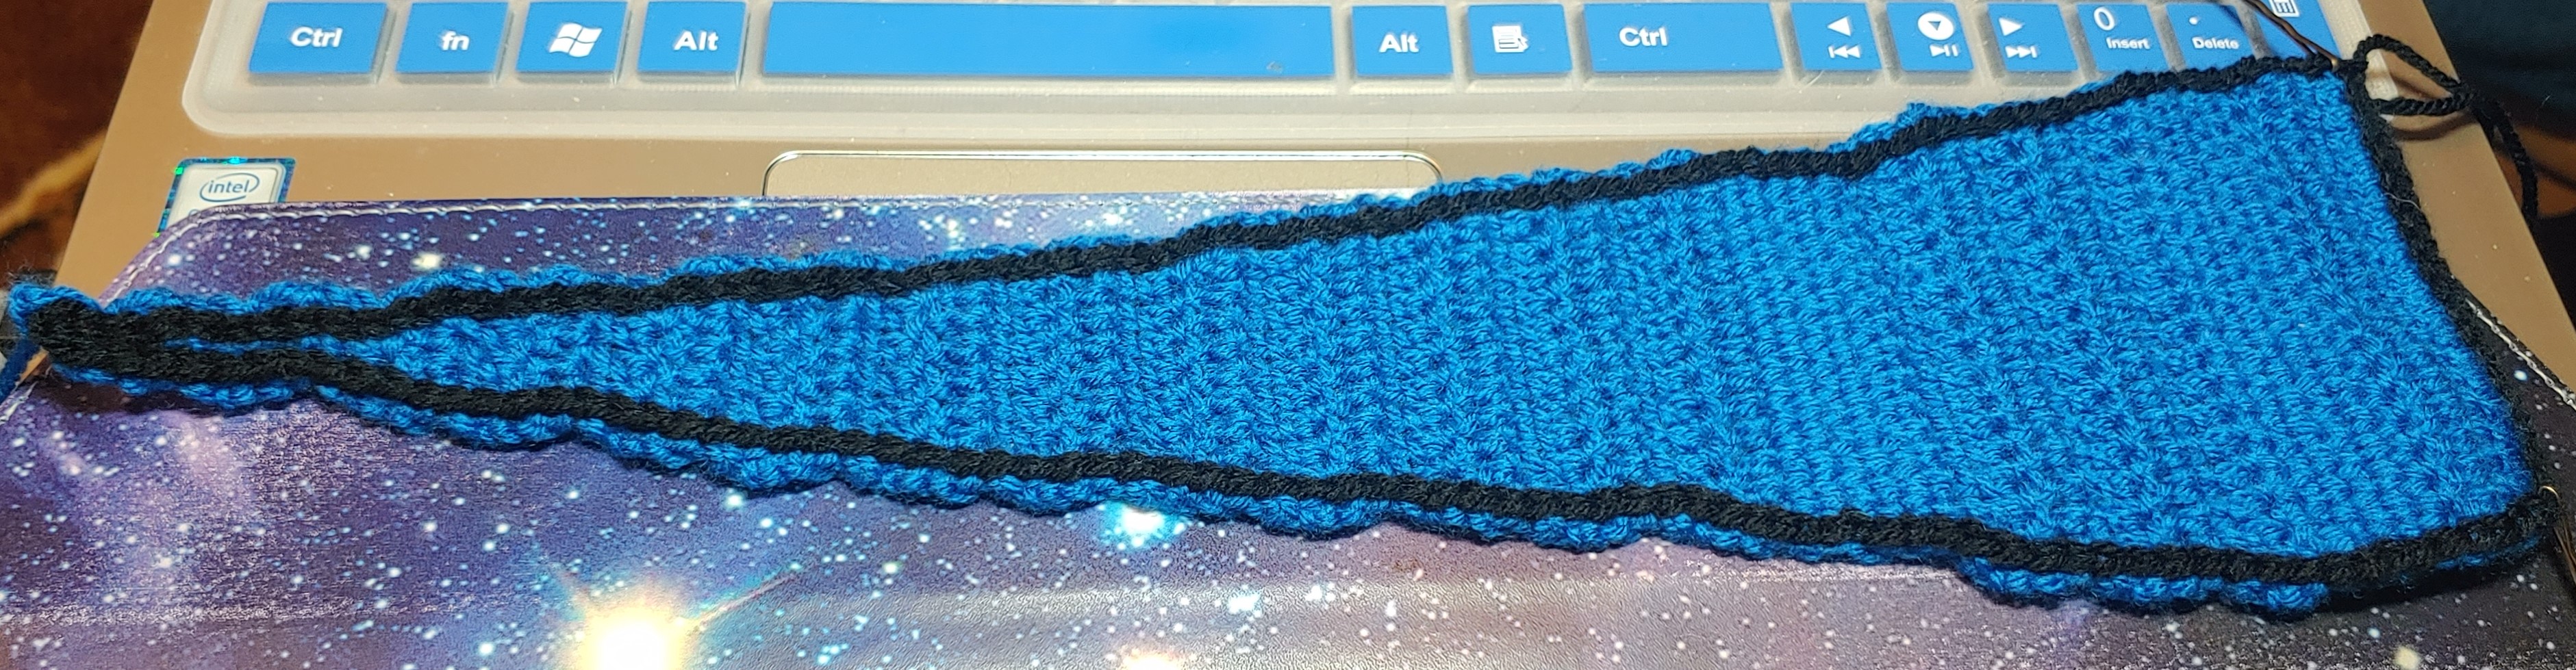 Week 7 - Knit Stitch